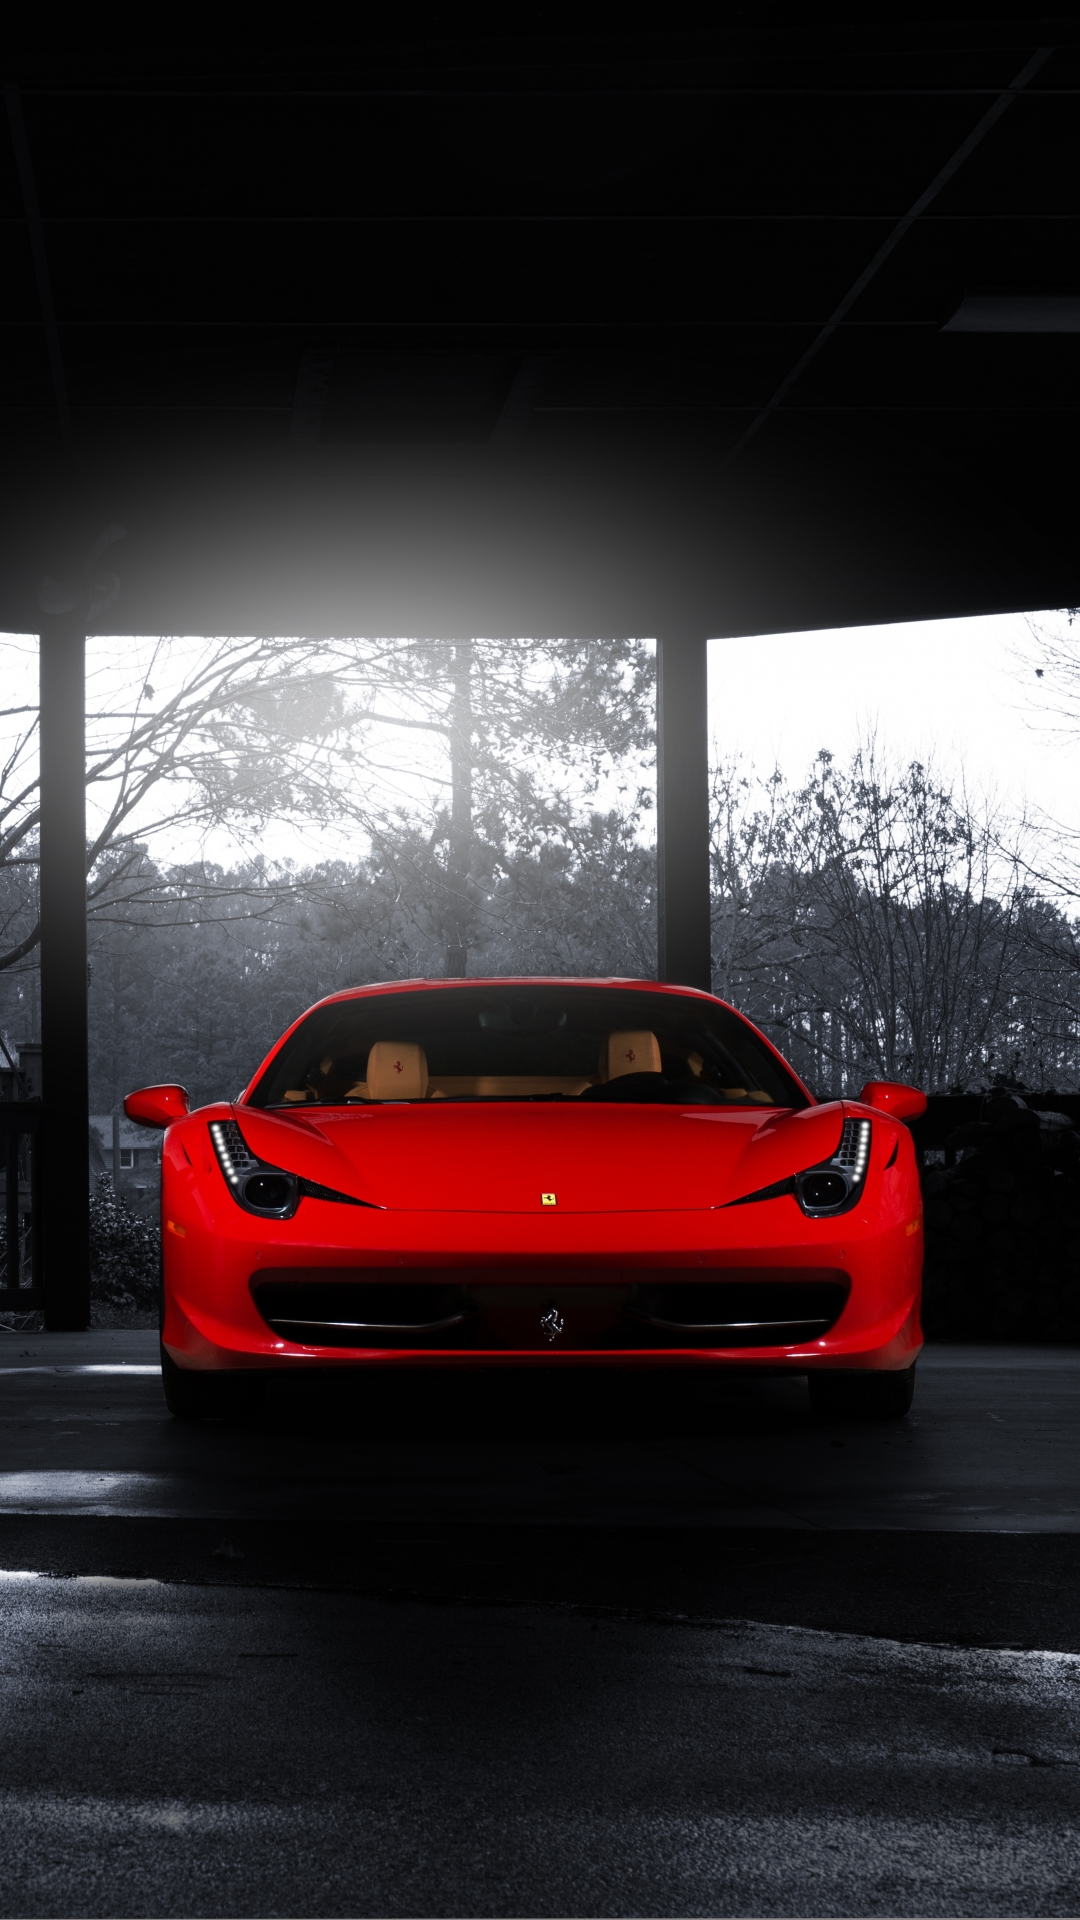 Ferrari iPhone Wallpapers | PixelsTalk.Net